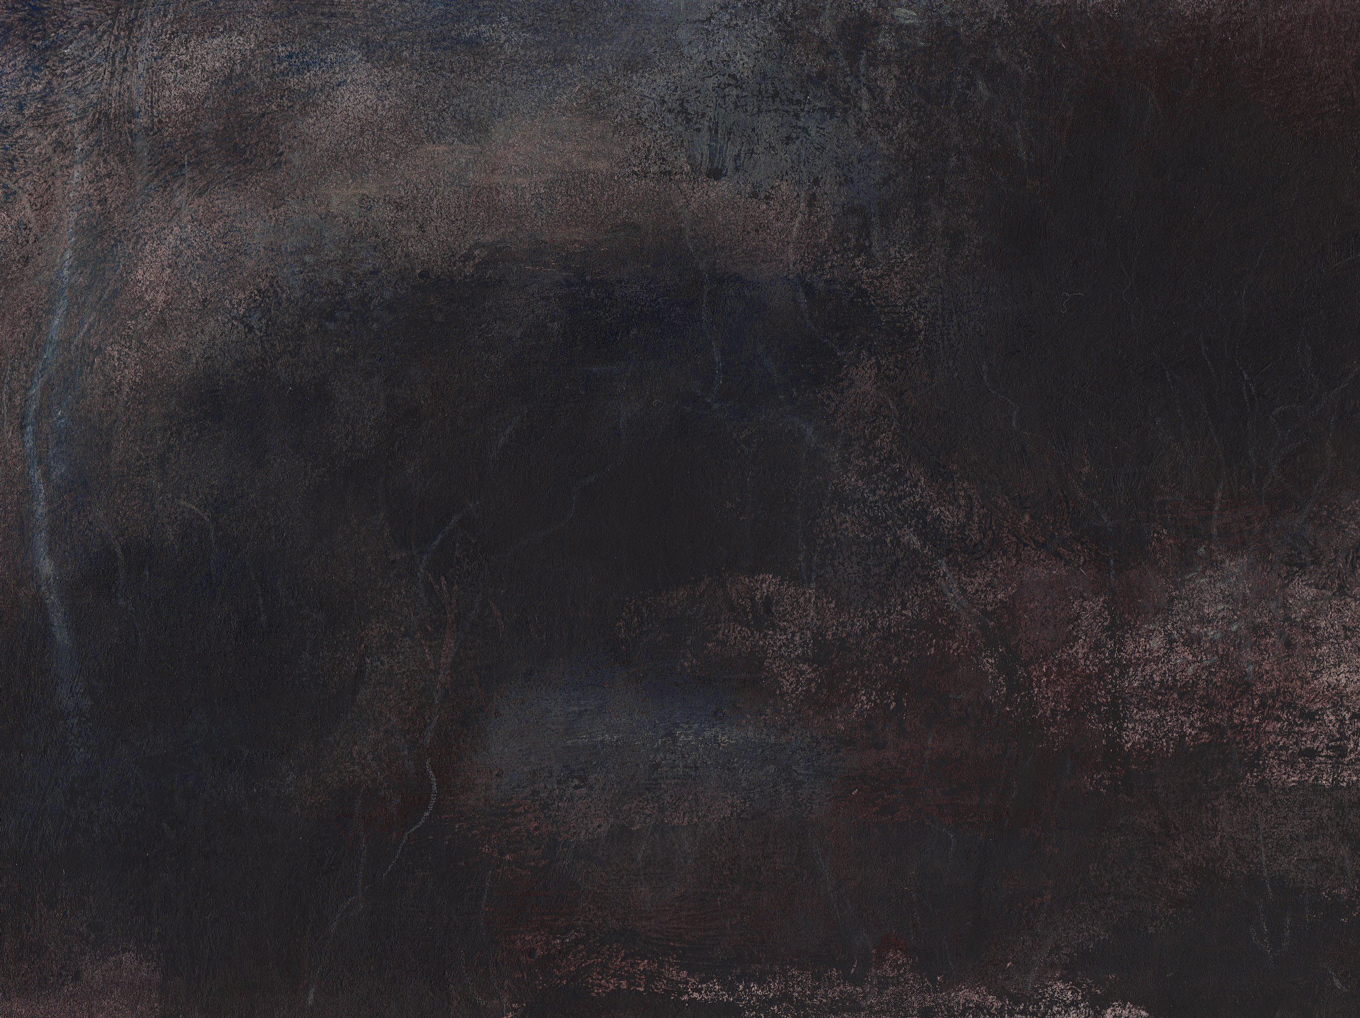 L1287 - Nicholas Herbert, British Artist, mixed media landscape painting of Mermaid's Pond Greensand Ridge, 2021